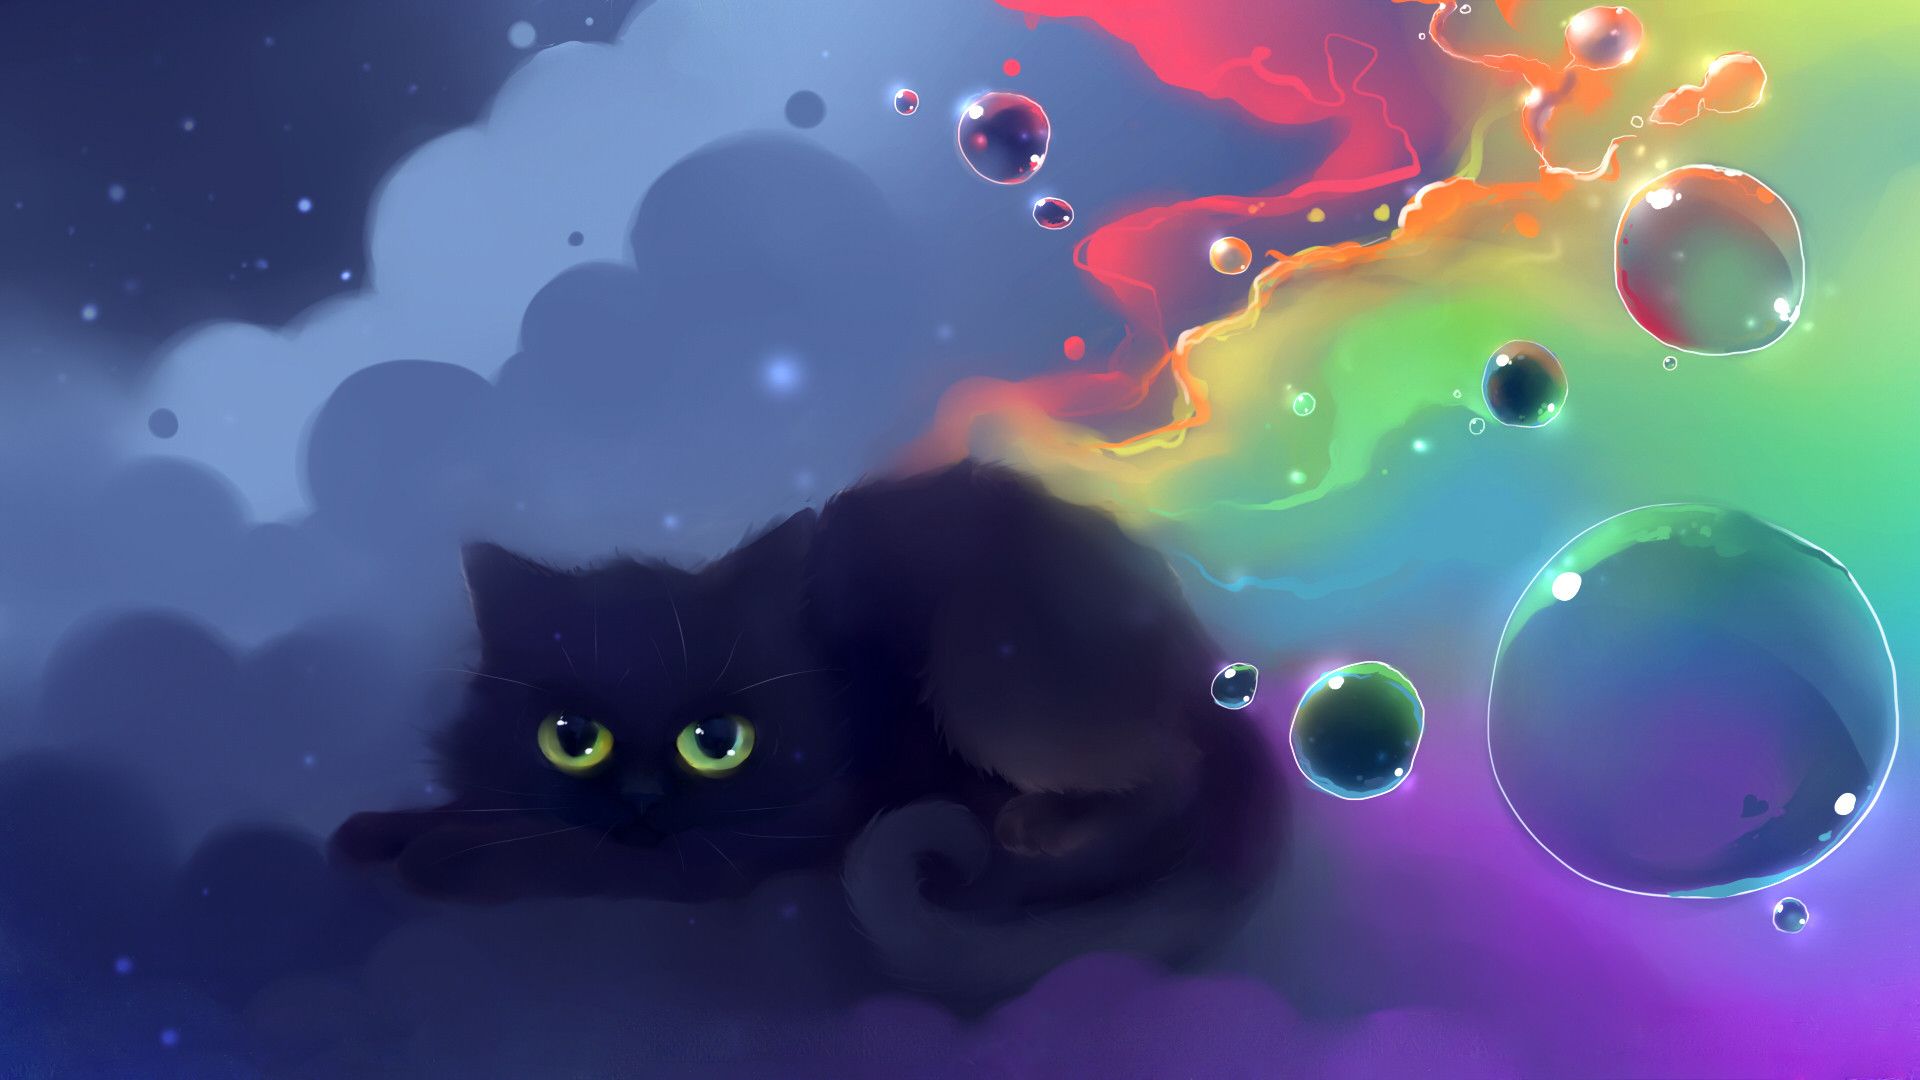 Cute Cat Art Wallpaper APK for Android Download